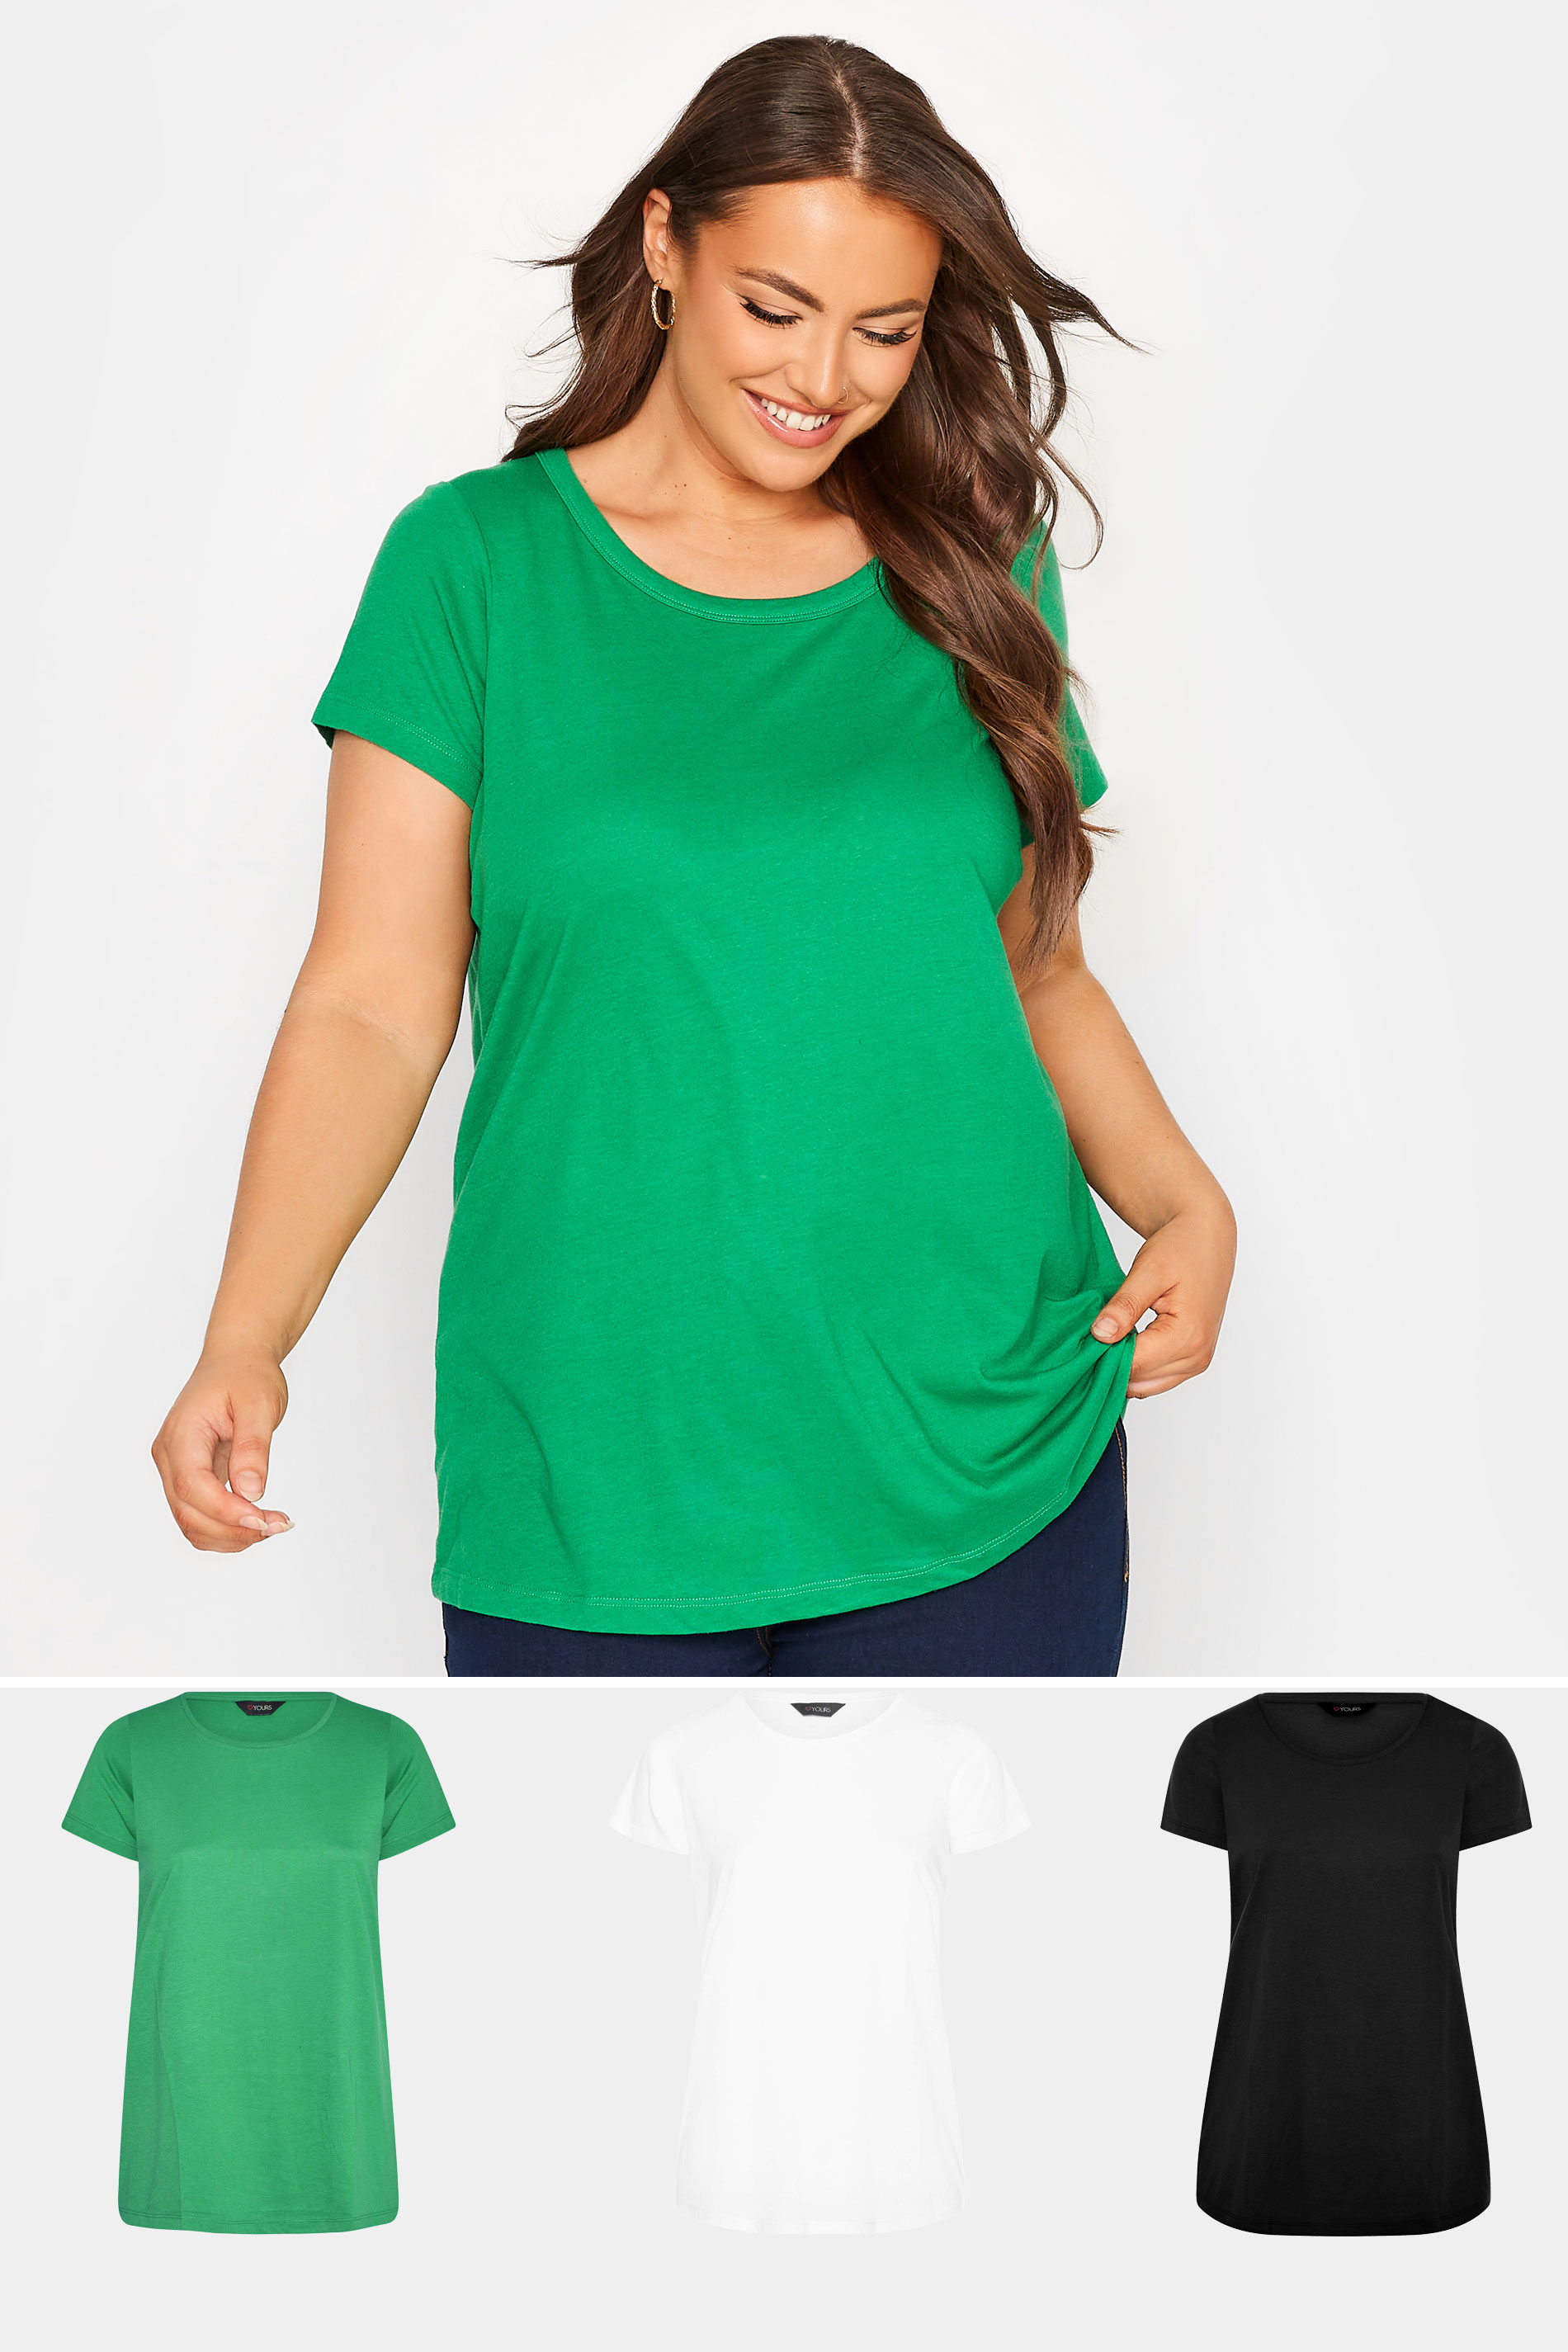 3 PACK Plus Size Green & Black T-Shirts 1